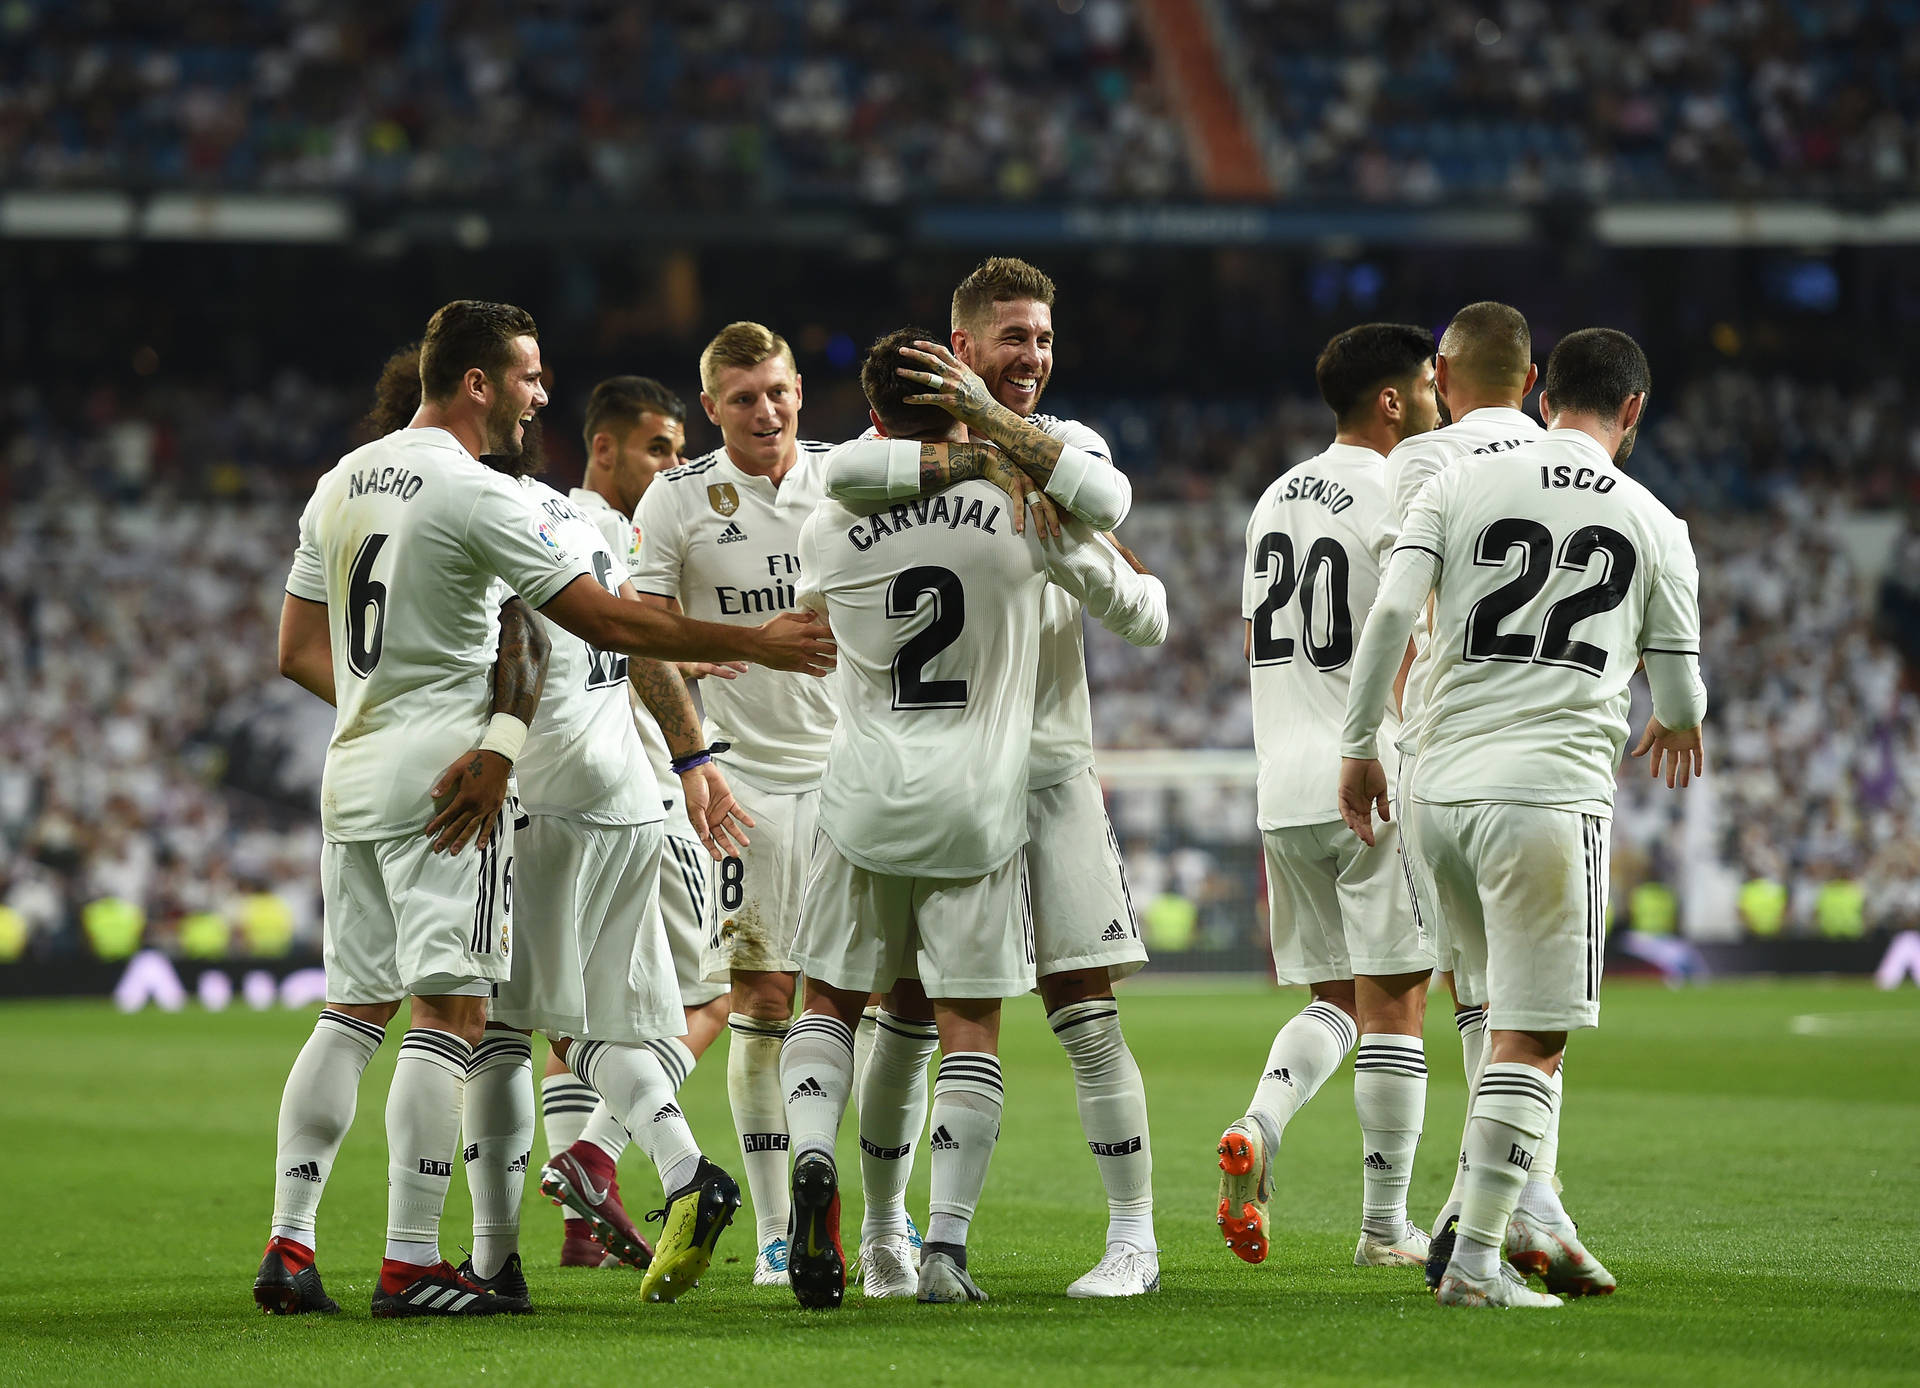 [100+] Fondos de fotos de Real Madrid 4k | Wallpapers.com